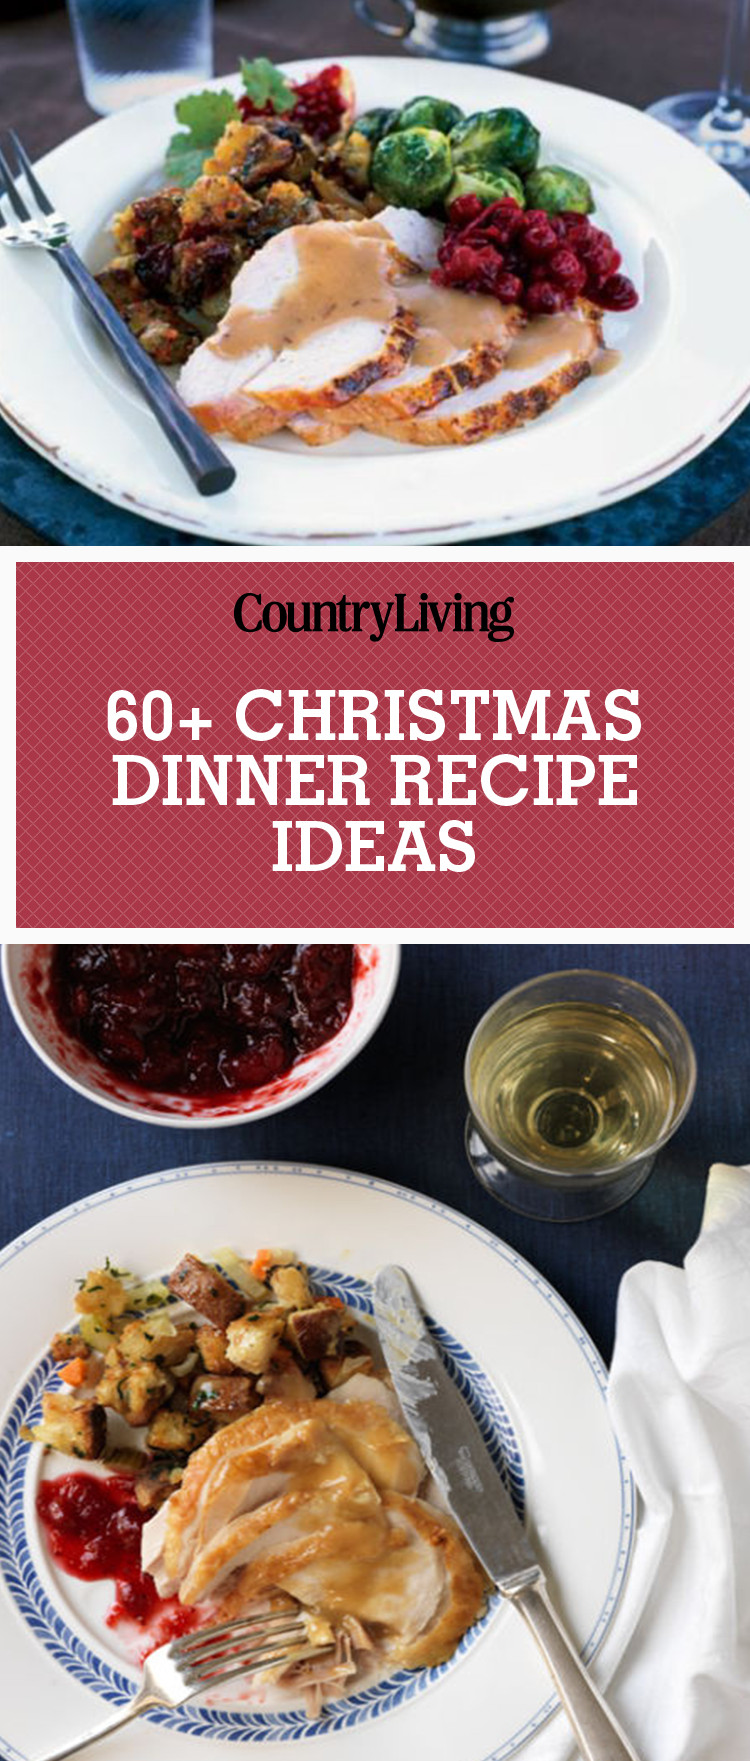 Holiday Dinner Ideas
 70 Easy Christmas Dinner Ideas Best Holiday Meal Recipes